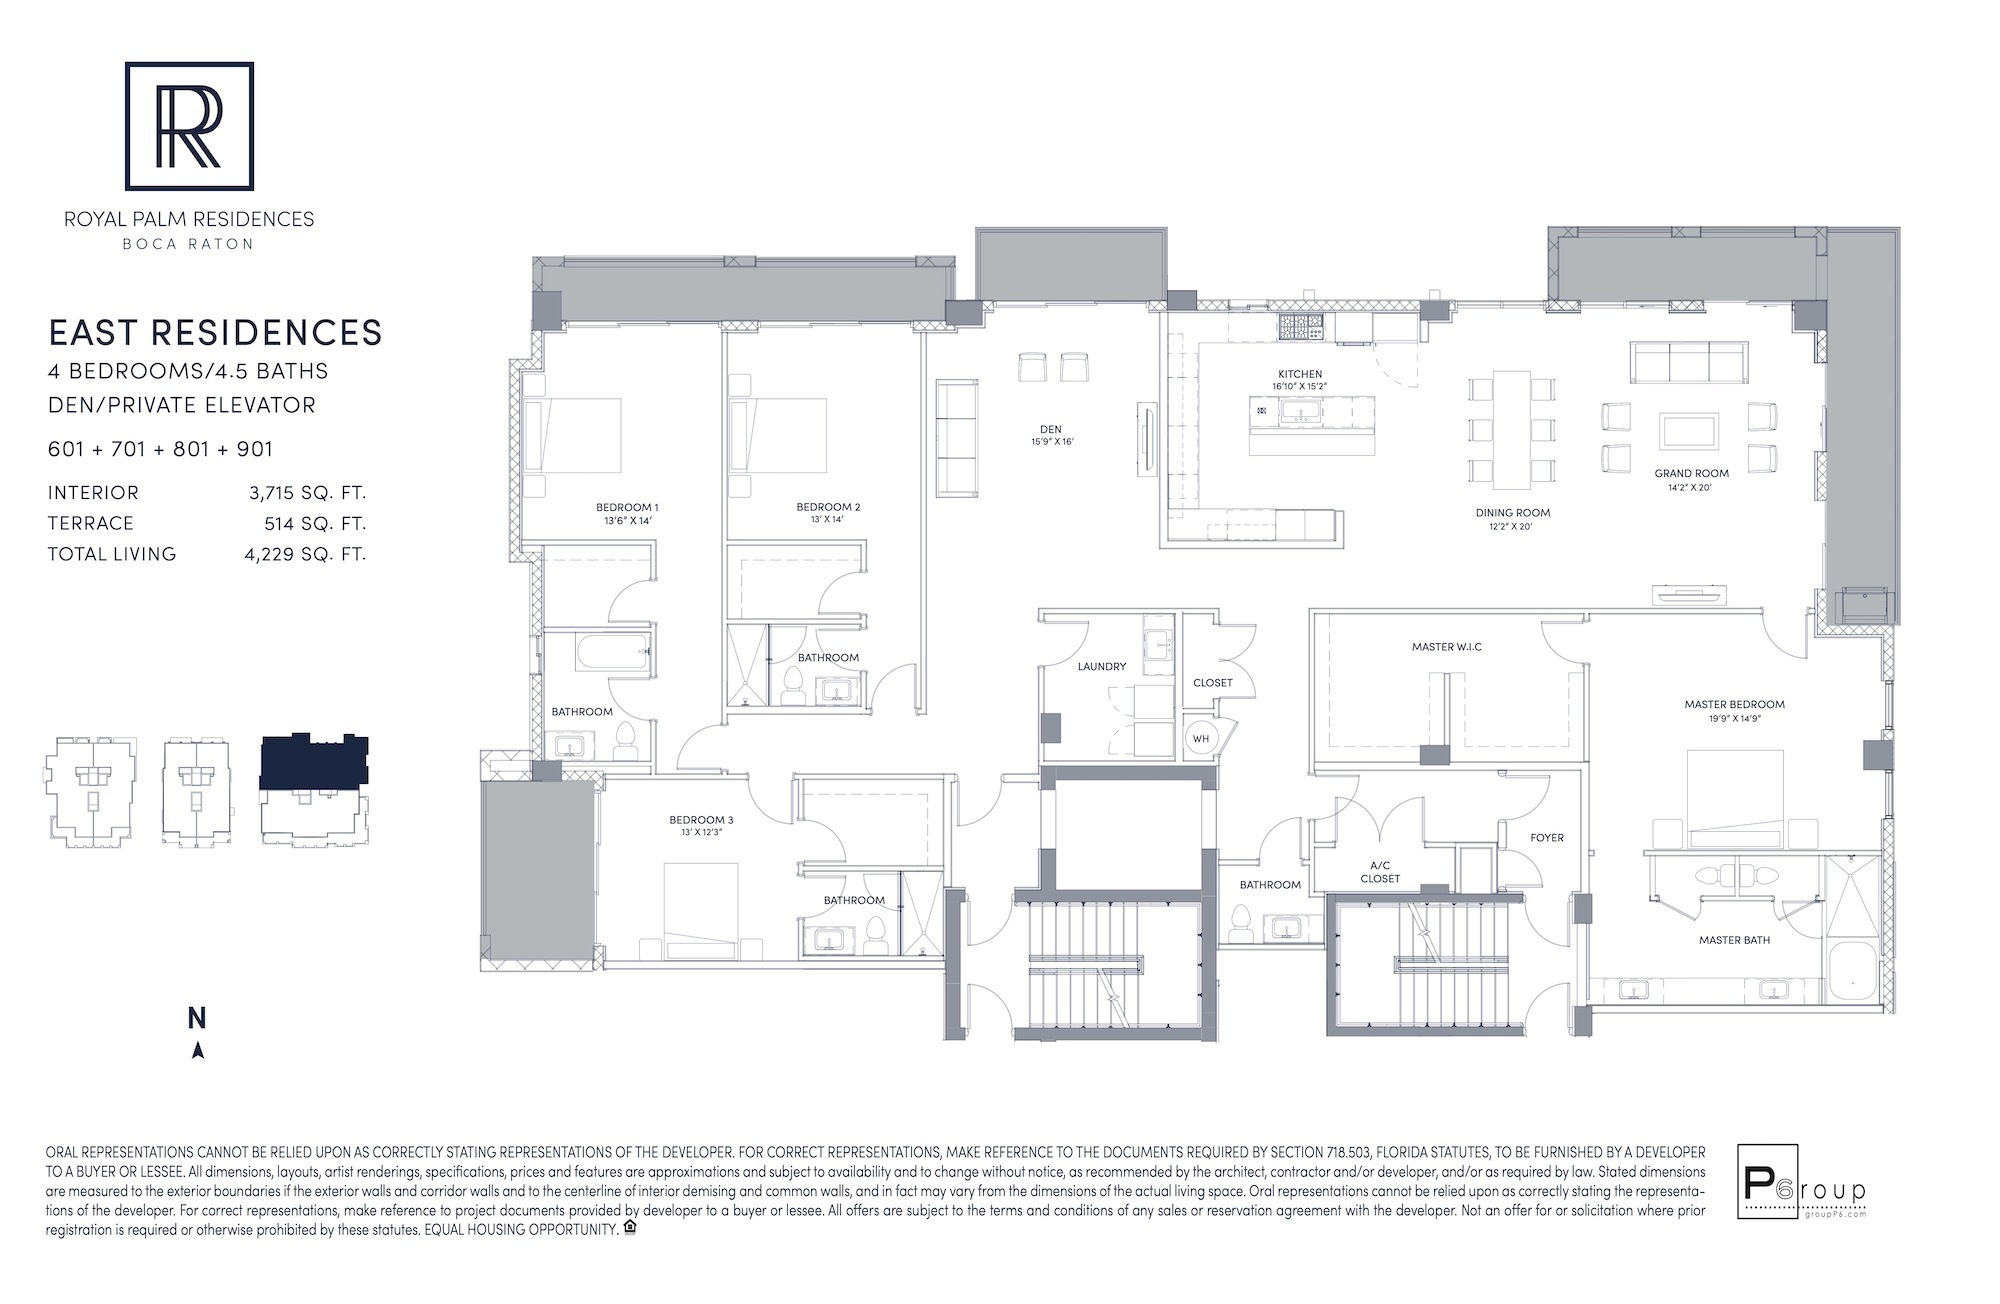 Floor Plan for Royal Palm Residences Floorplans, East Residences 601 + 701 + 801 + 901